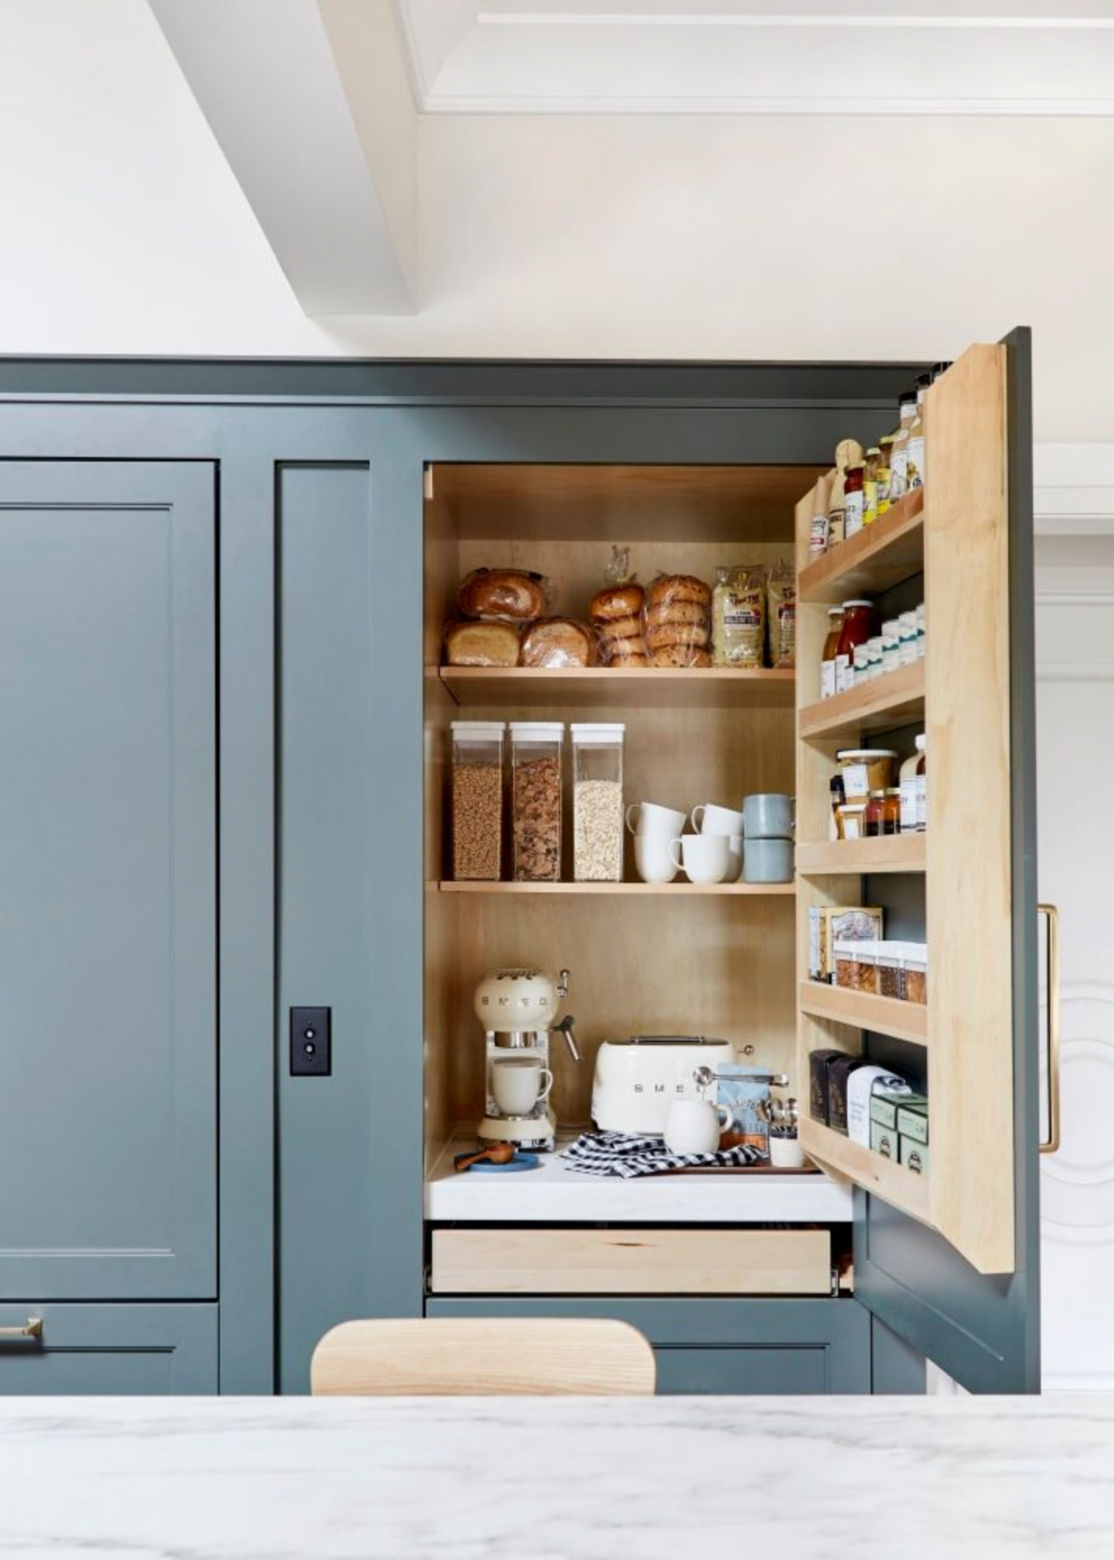 Using modern small kitchen storage for a tidy dream kitchen 22